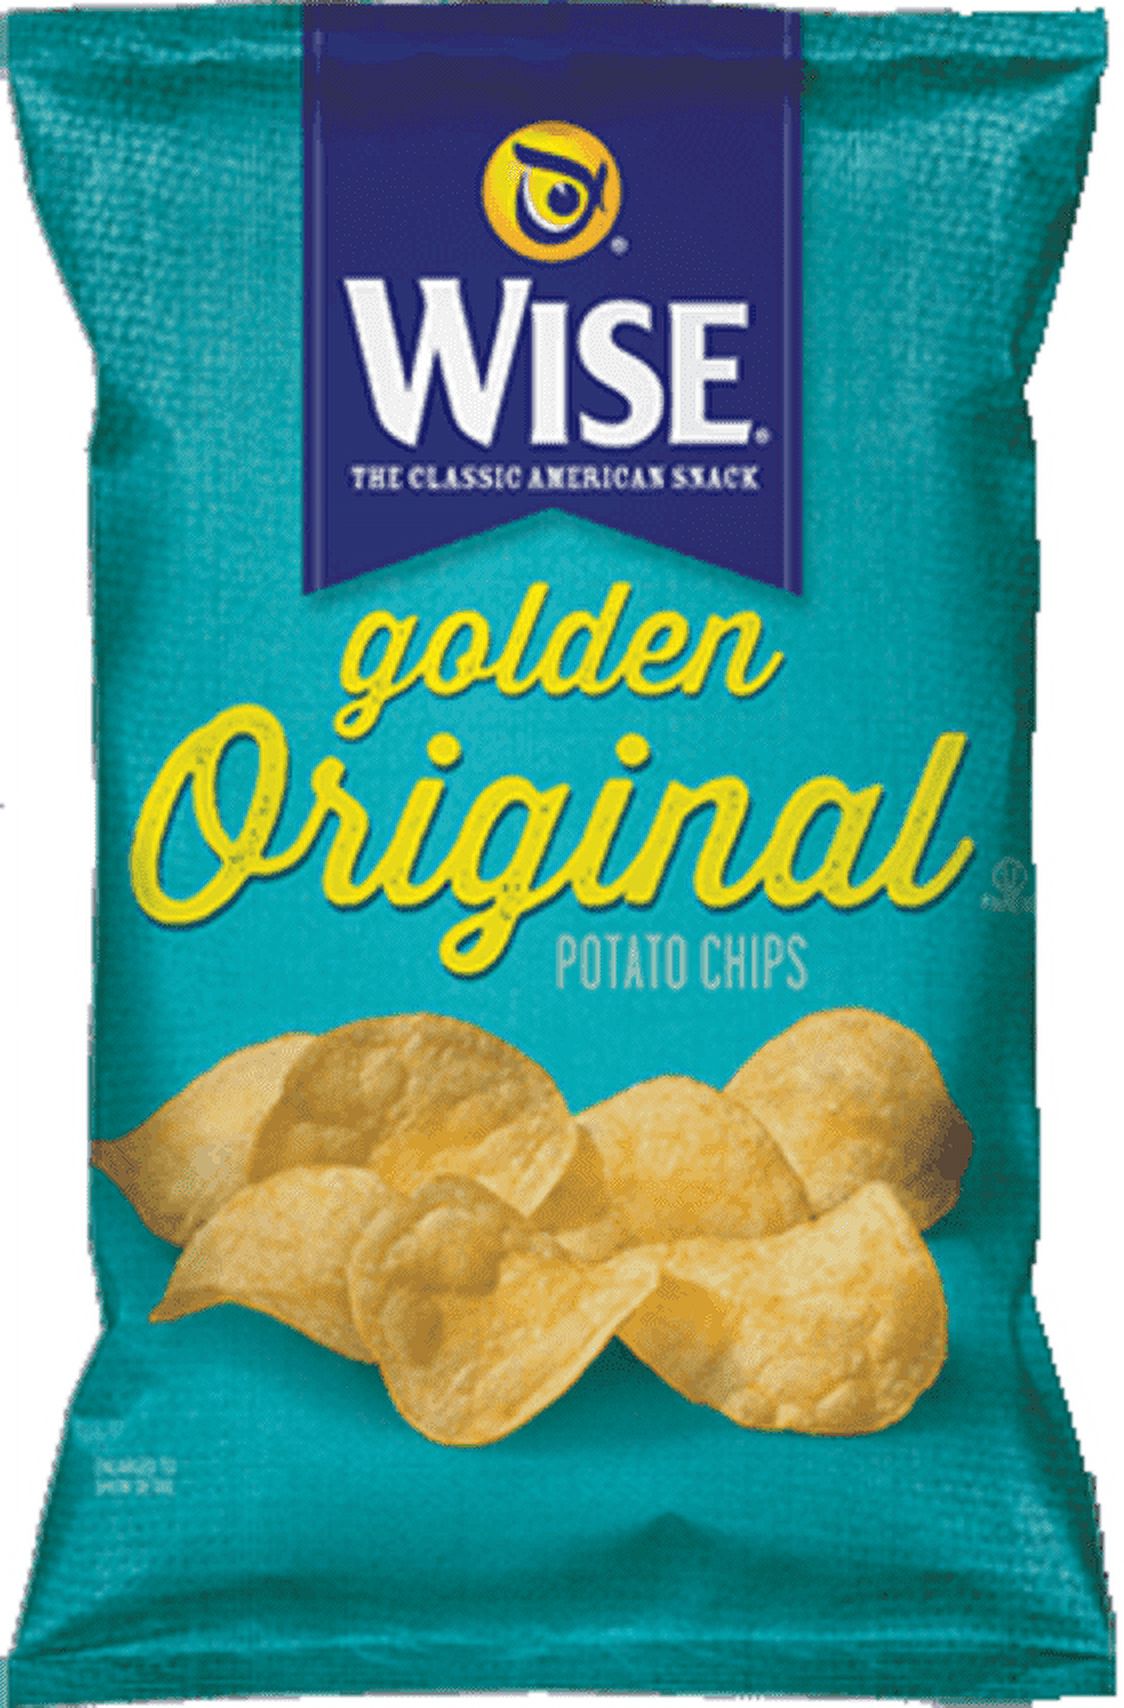 Wise Foods Golden Original Potato Chips, 3-Pack 7.5 oz. Bags - image 1 of 3